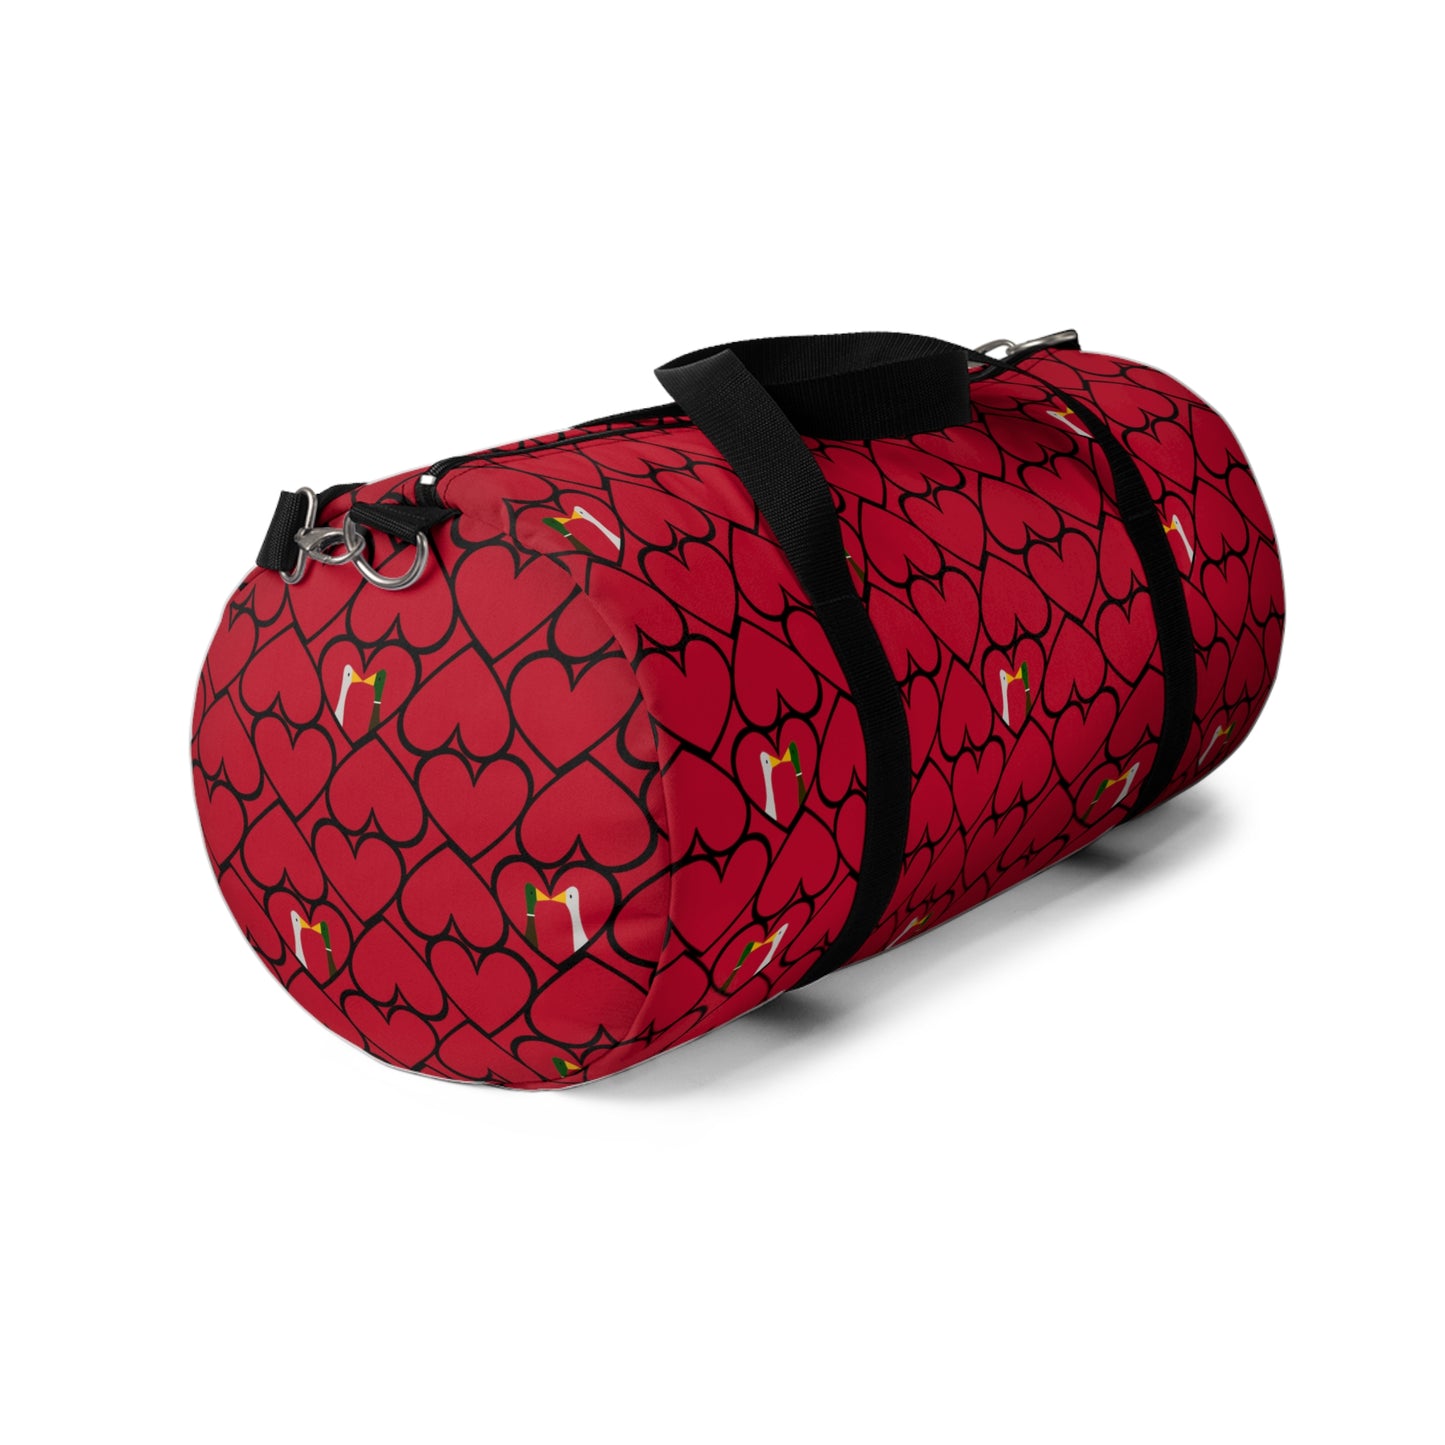 Ducks in hearts - Fire Engine Red c8092e - Duffel Bag